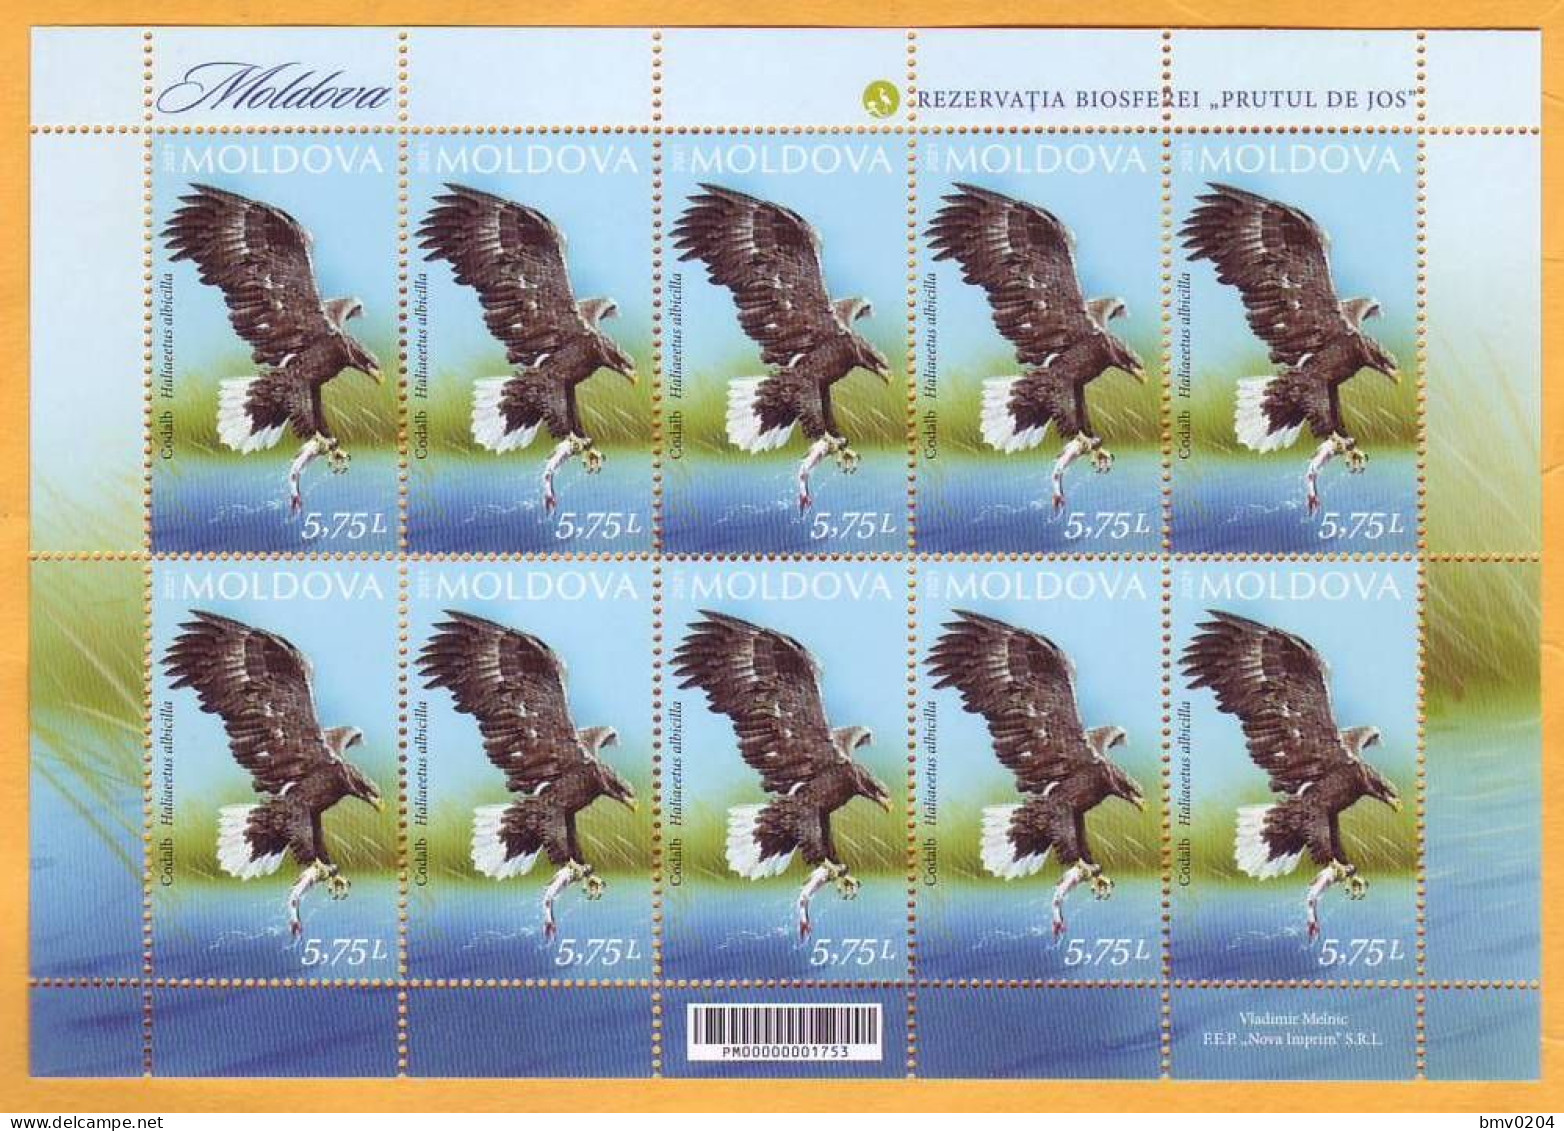 2021 Moldova Moldavie Moldau Romania  Sheet  Lower Prut ”Biosphere Reserve” Birds, Fauna Mint 5.75 - Moldavia